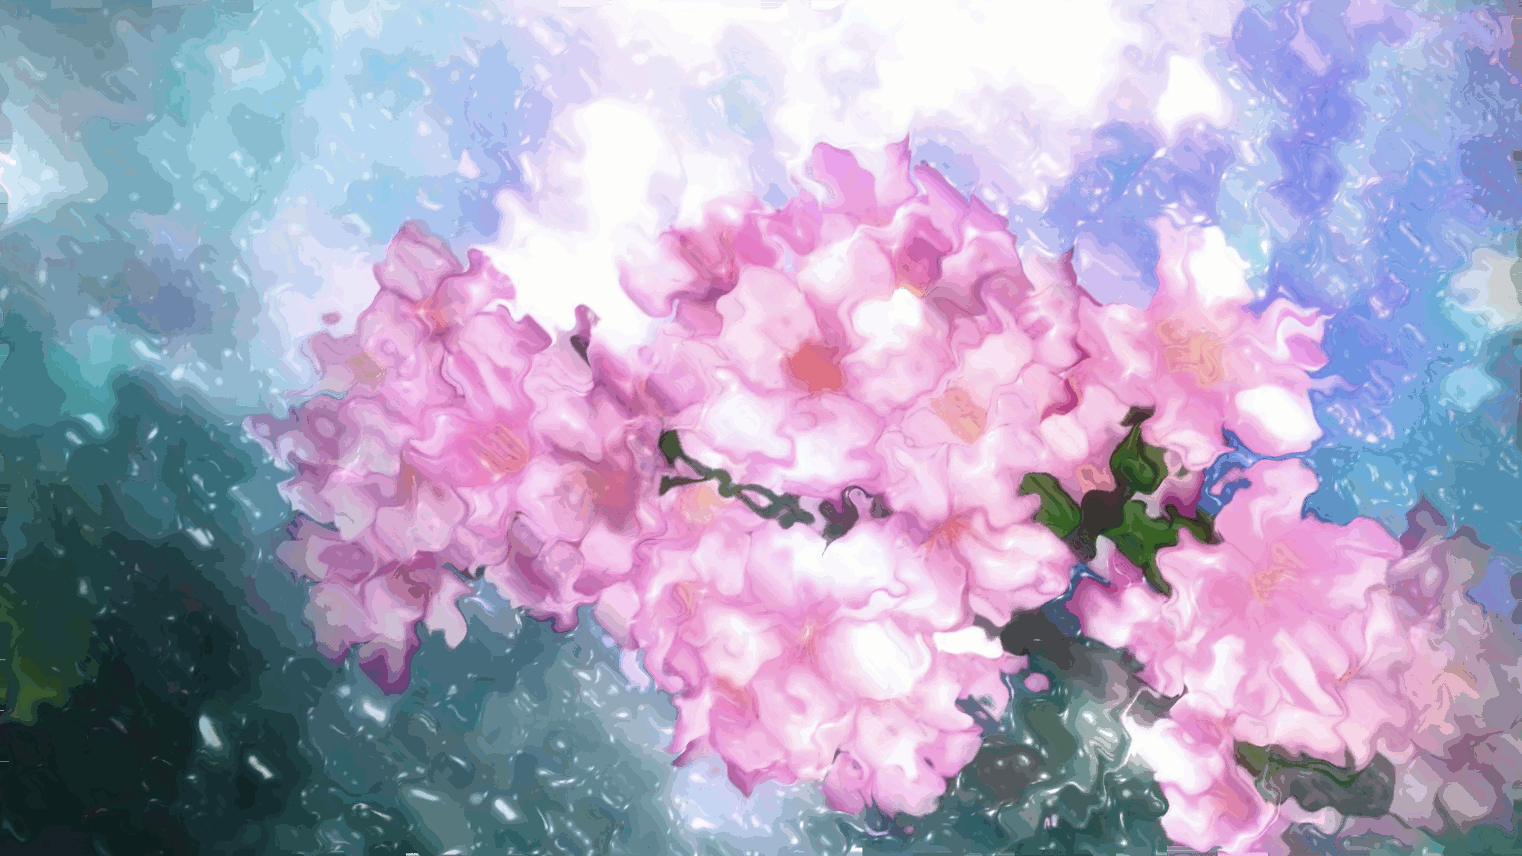 ArtStation - Pink flowers